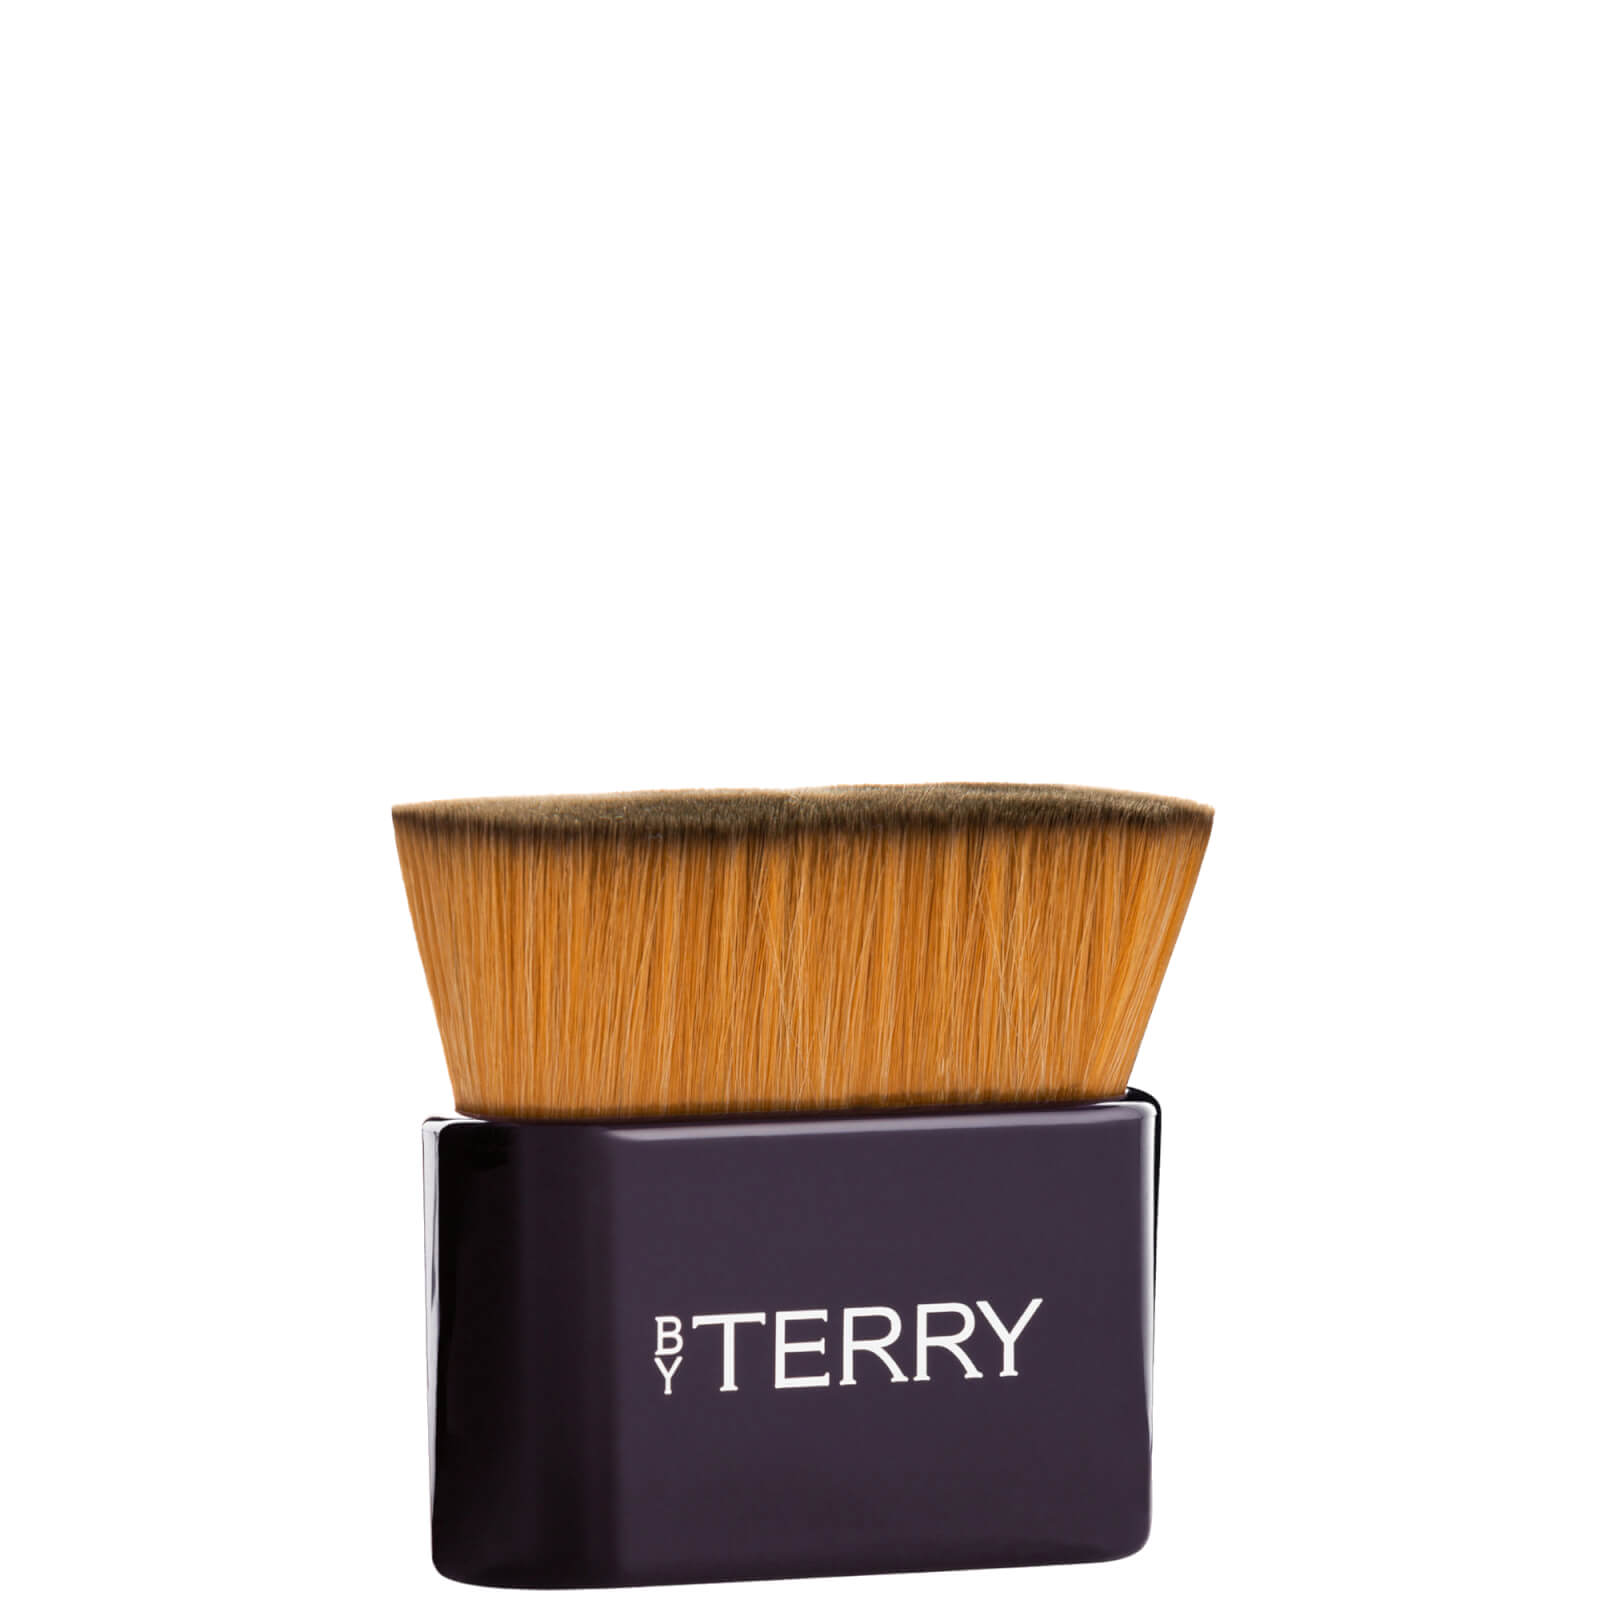 By Terry Tool-Expert pennello per viso e corpo